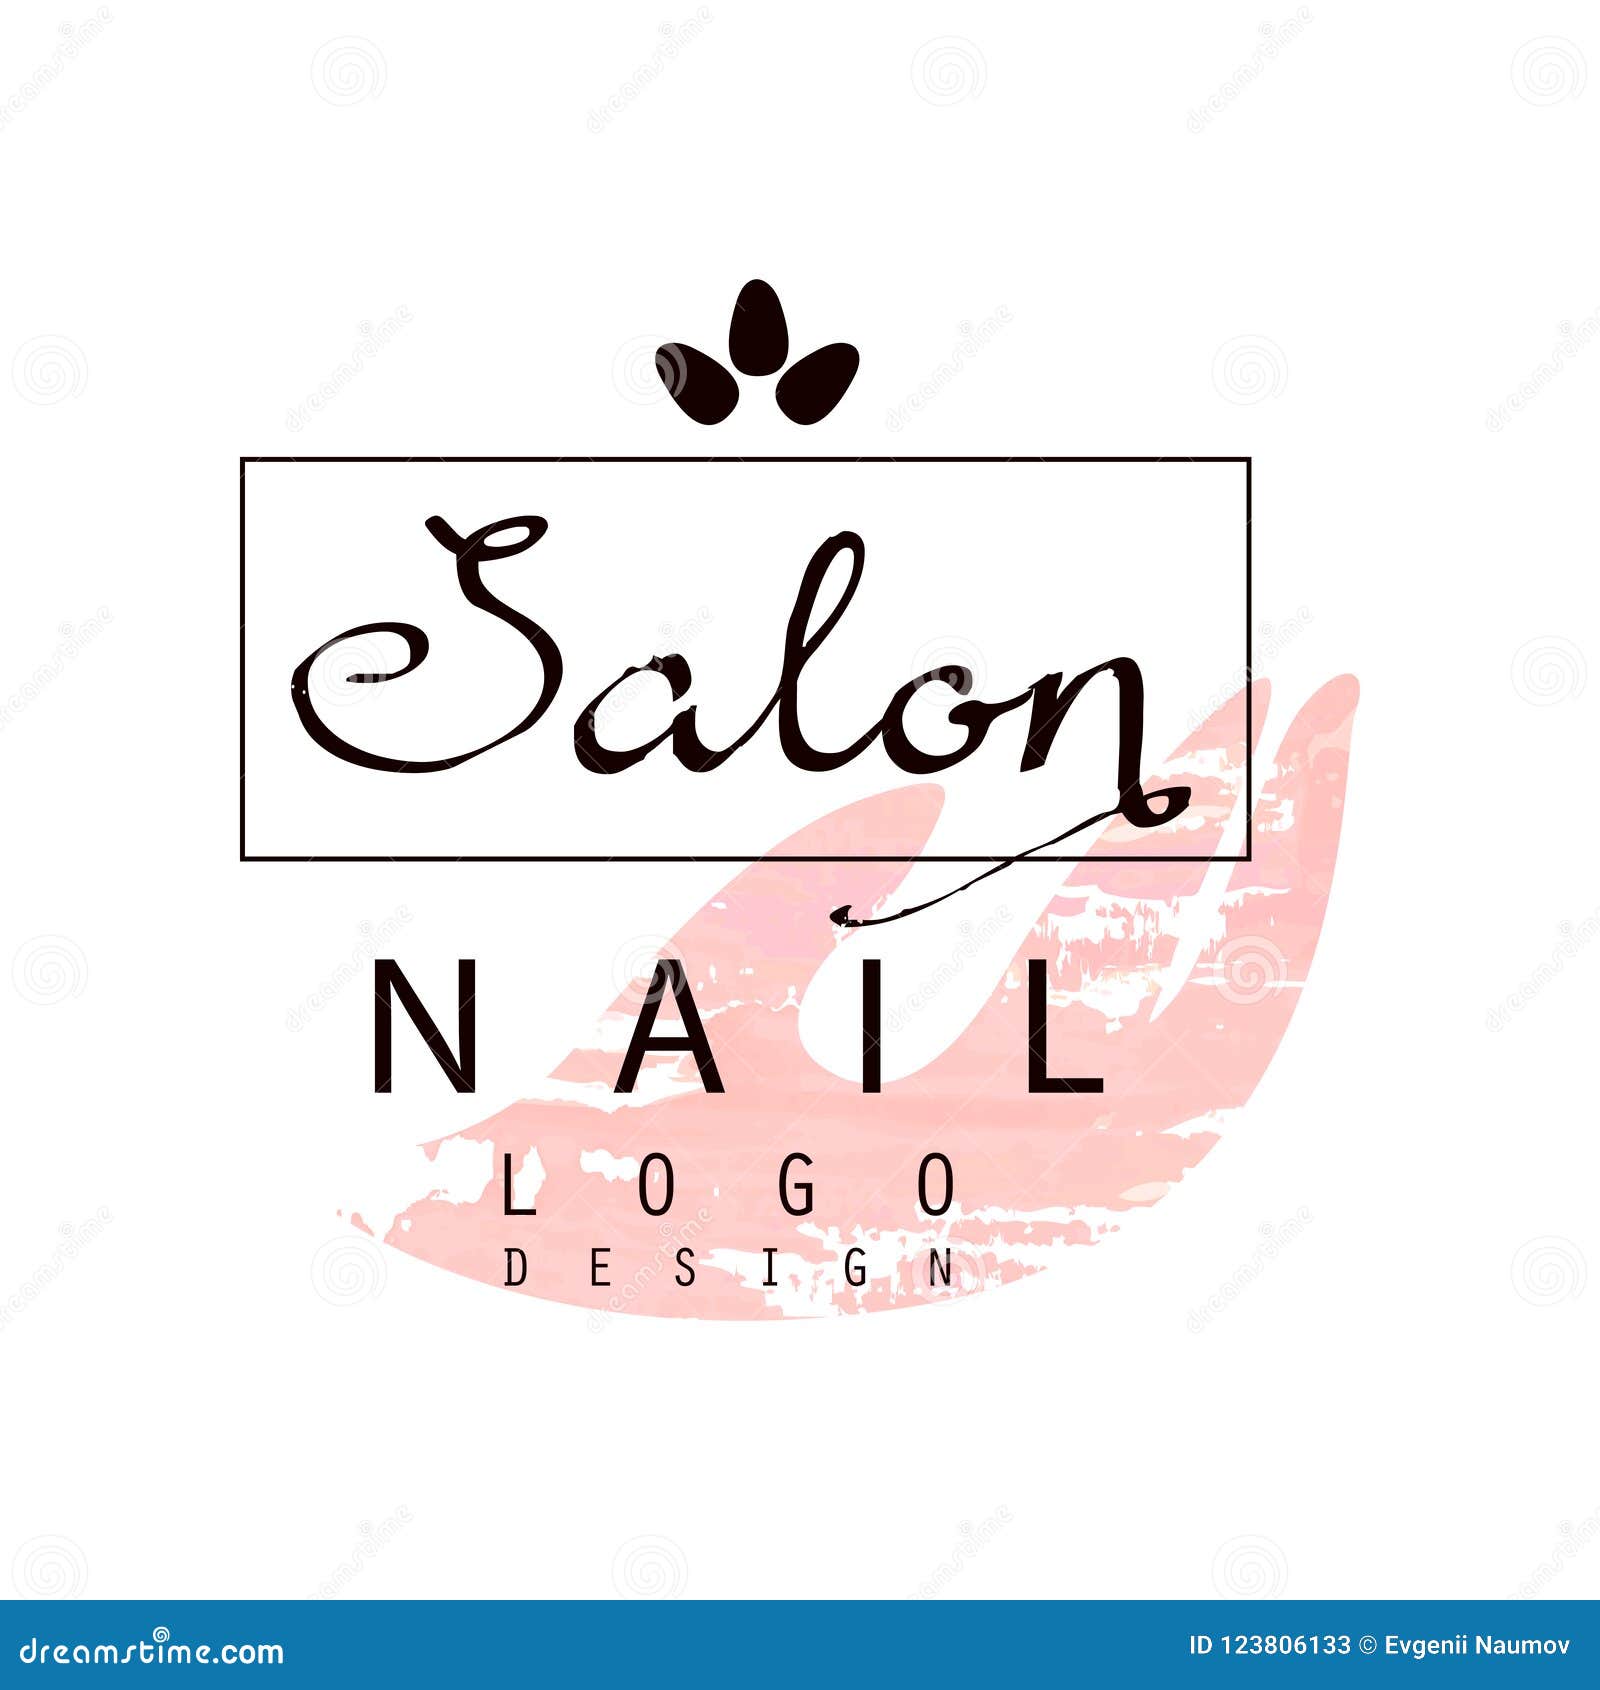 Nail Salon Logo Design, Template For Nail Bar, Beauty Studio